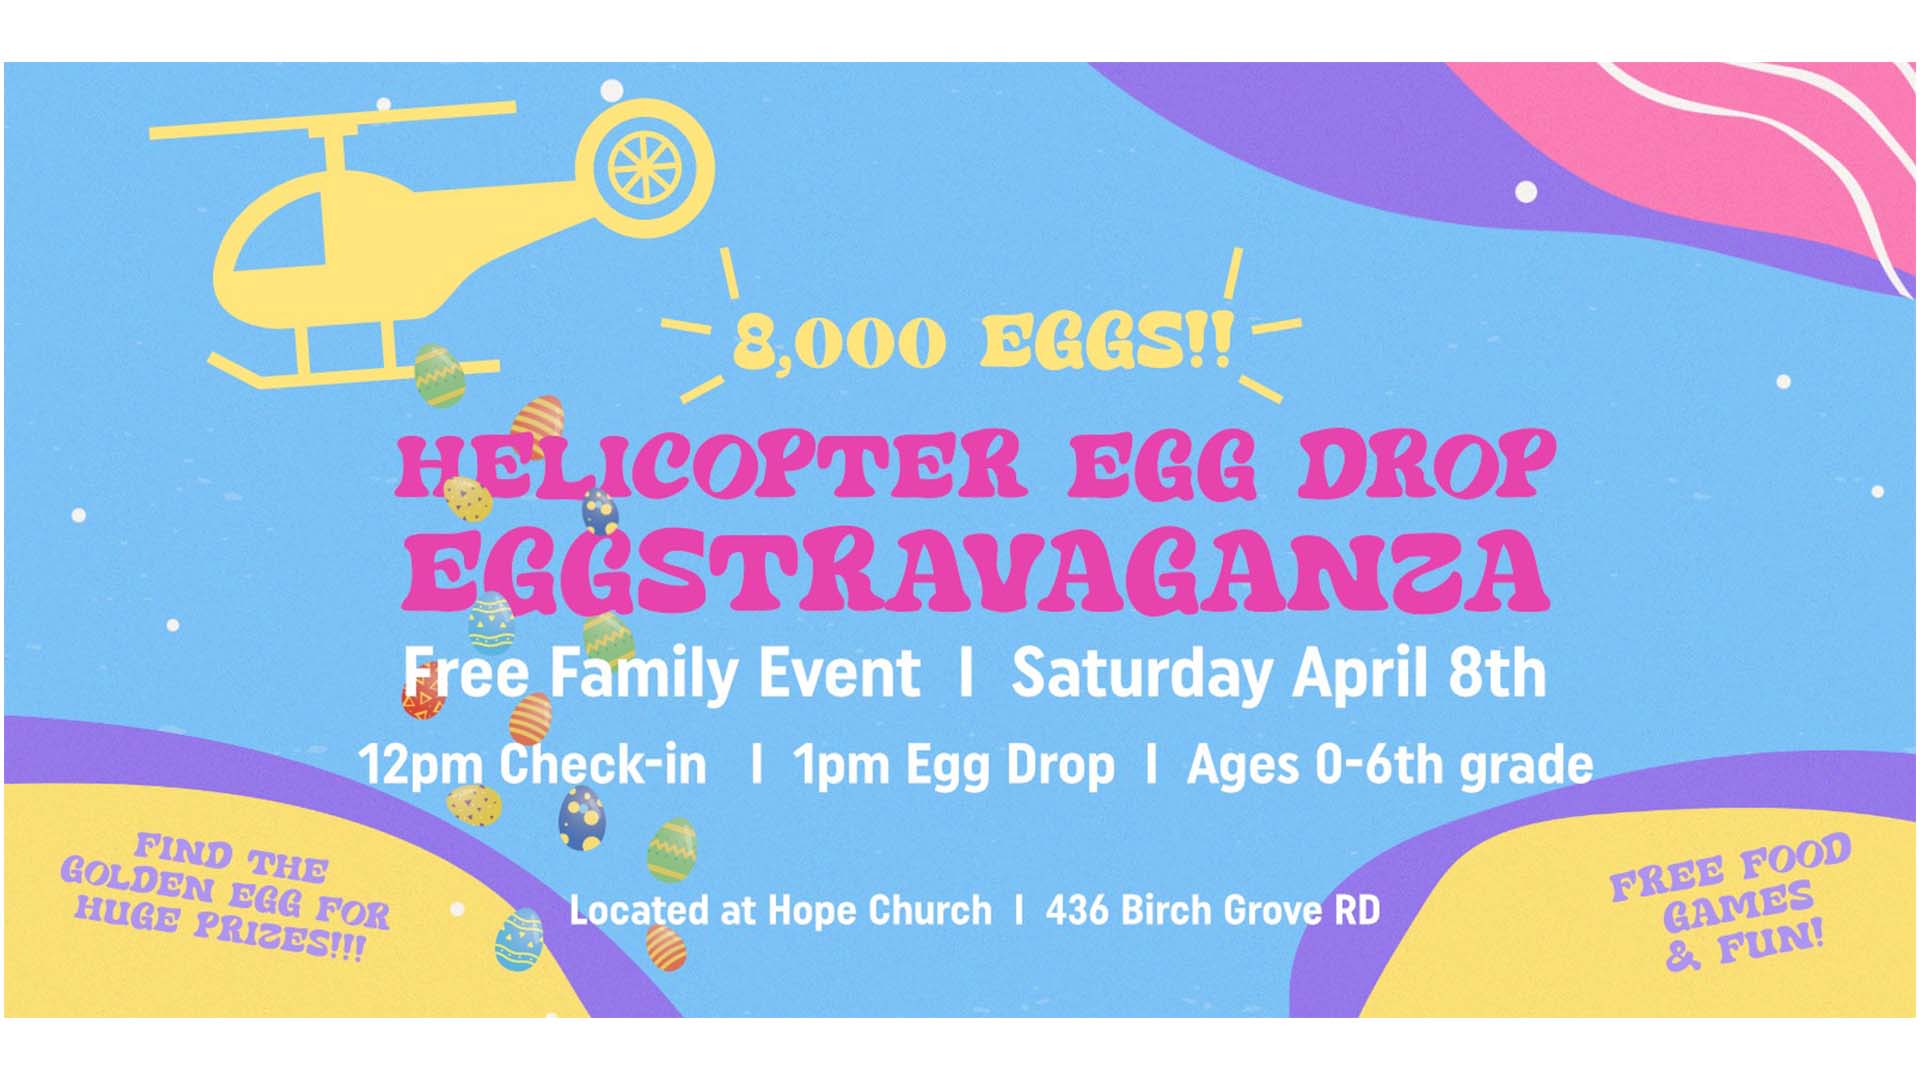 Helicopter Egg Drop Eggstravaganza